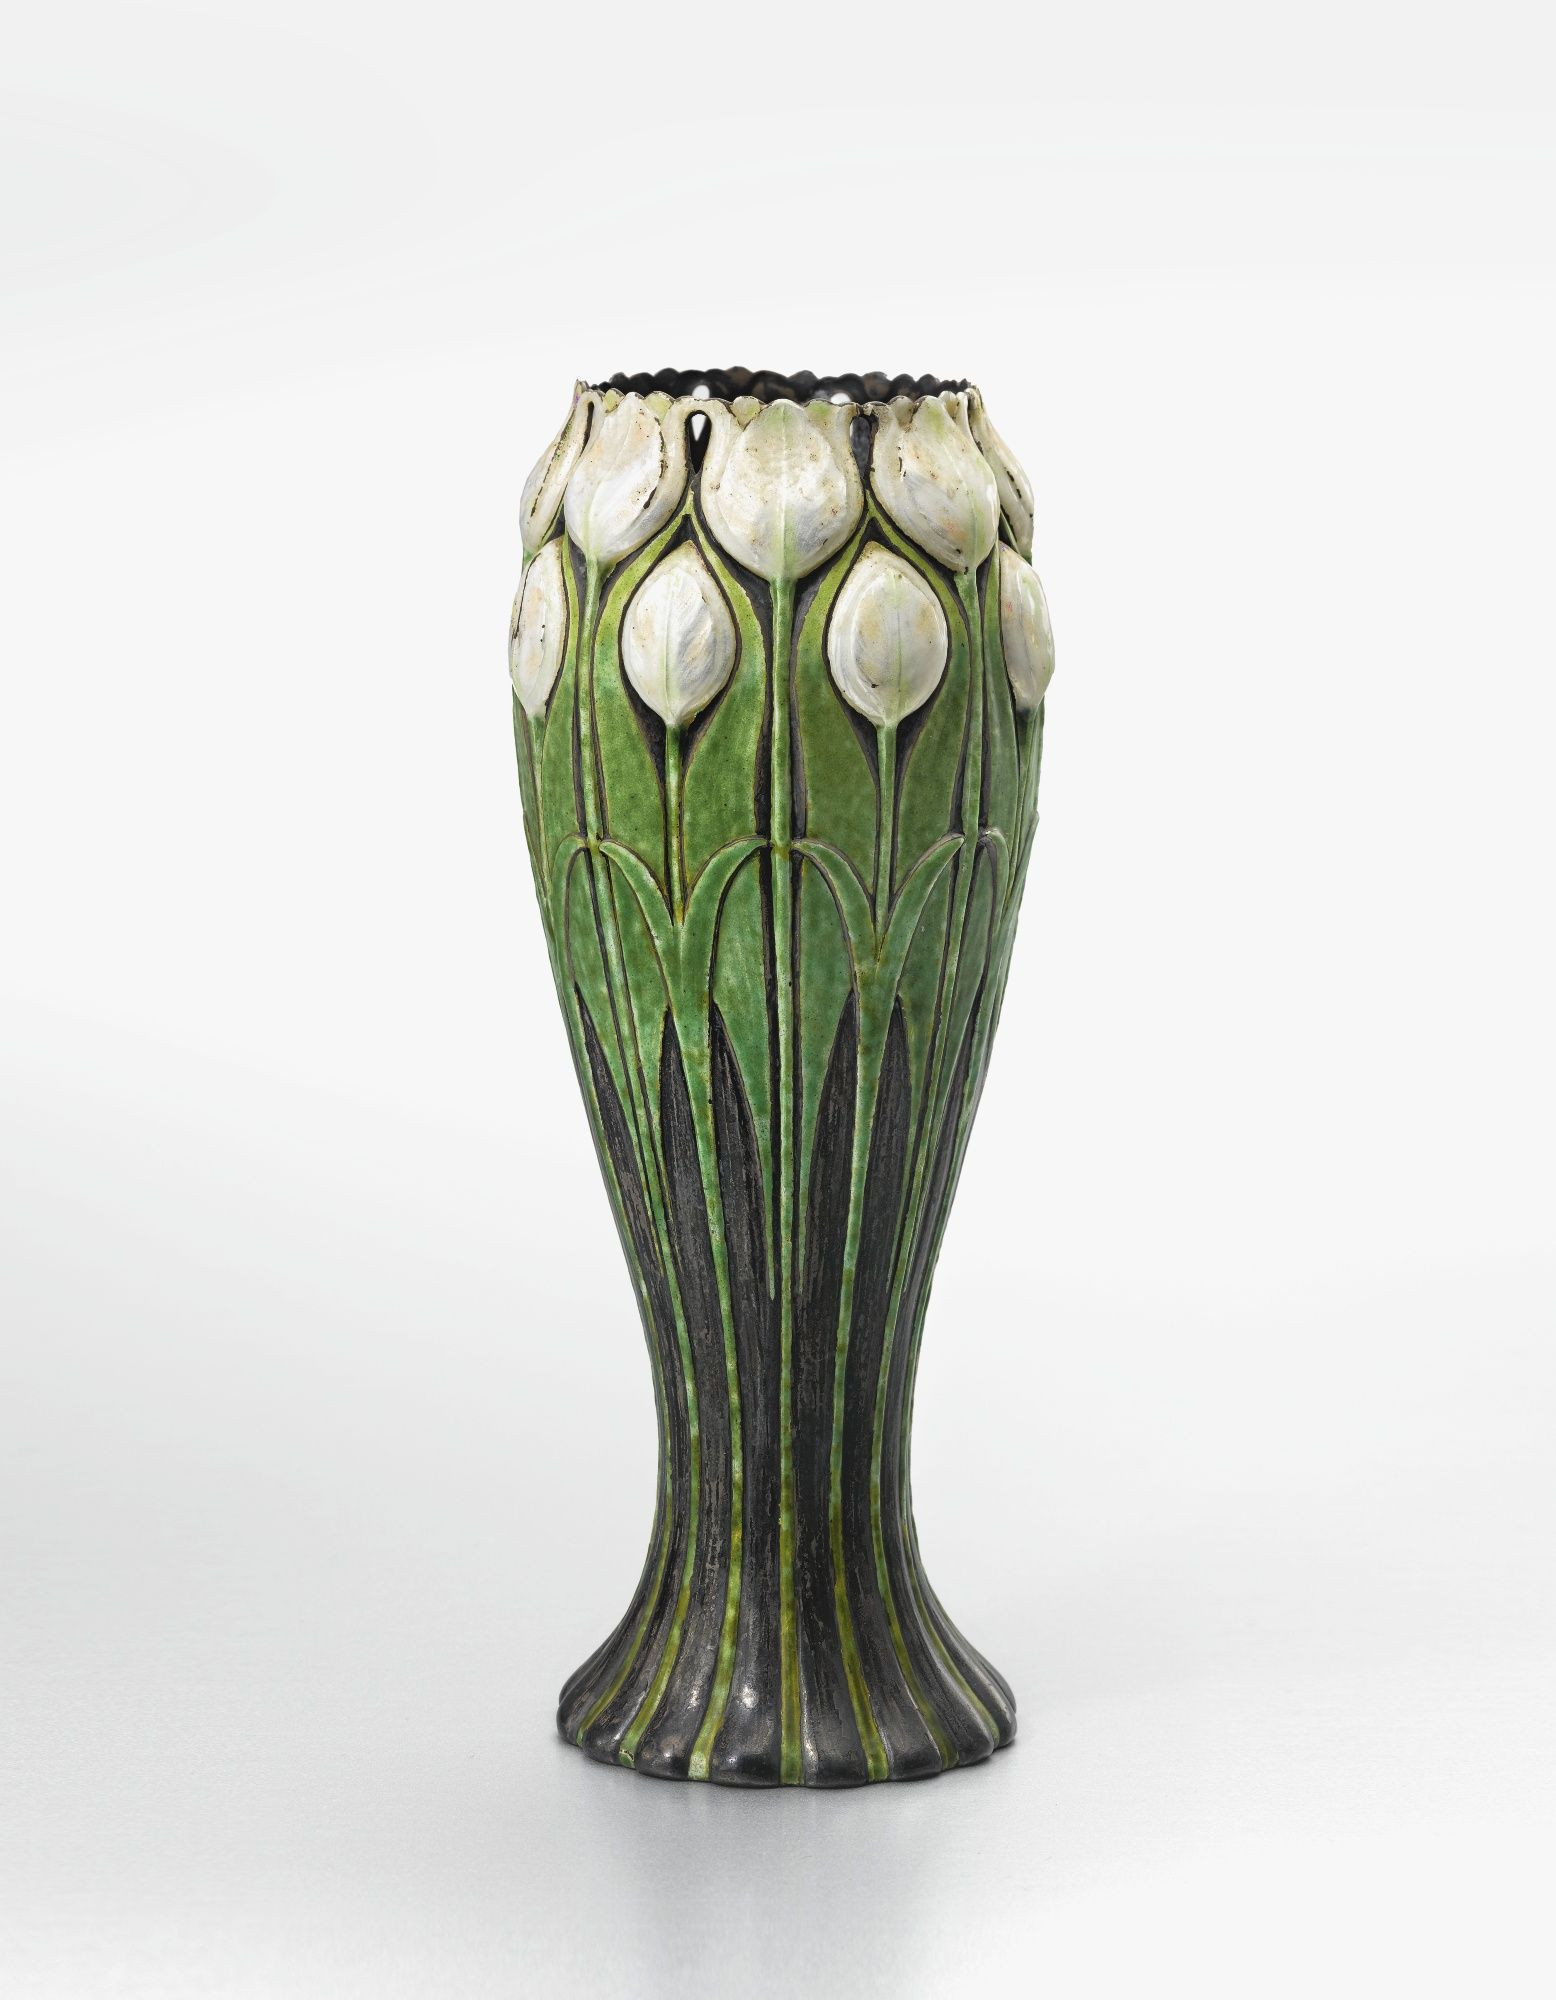 plastic urn vase of crystal vase prices photograph 8682h vases plastic pedestal vase inside crystal vase prices images tiffany co tulip vase impressed tiffany co makers